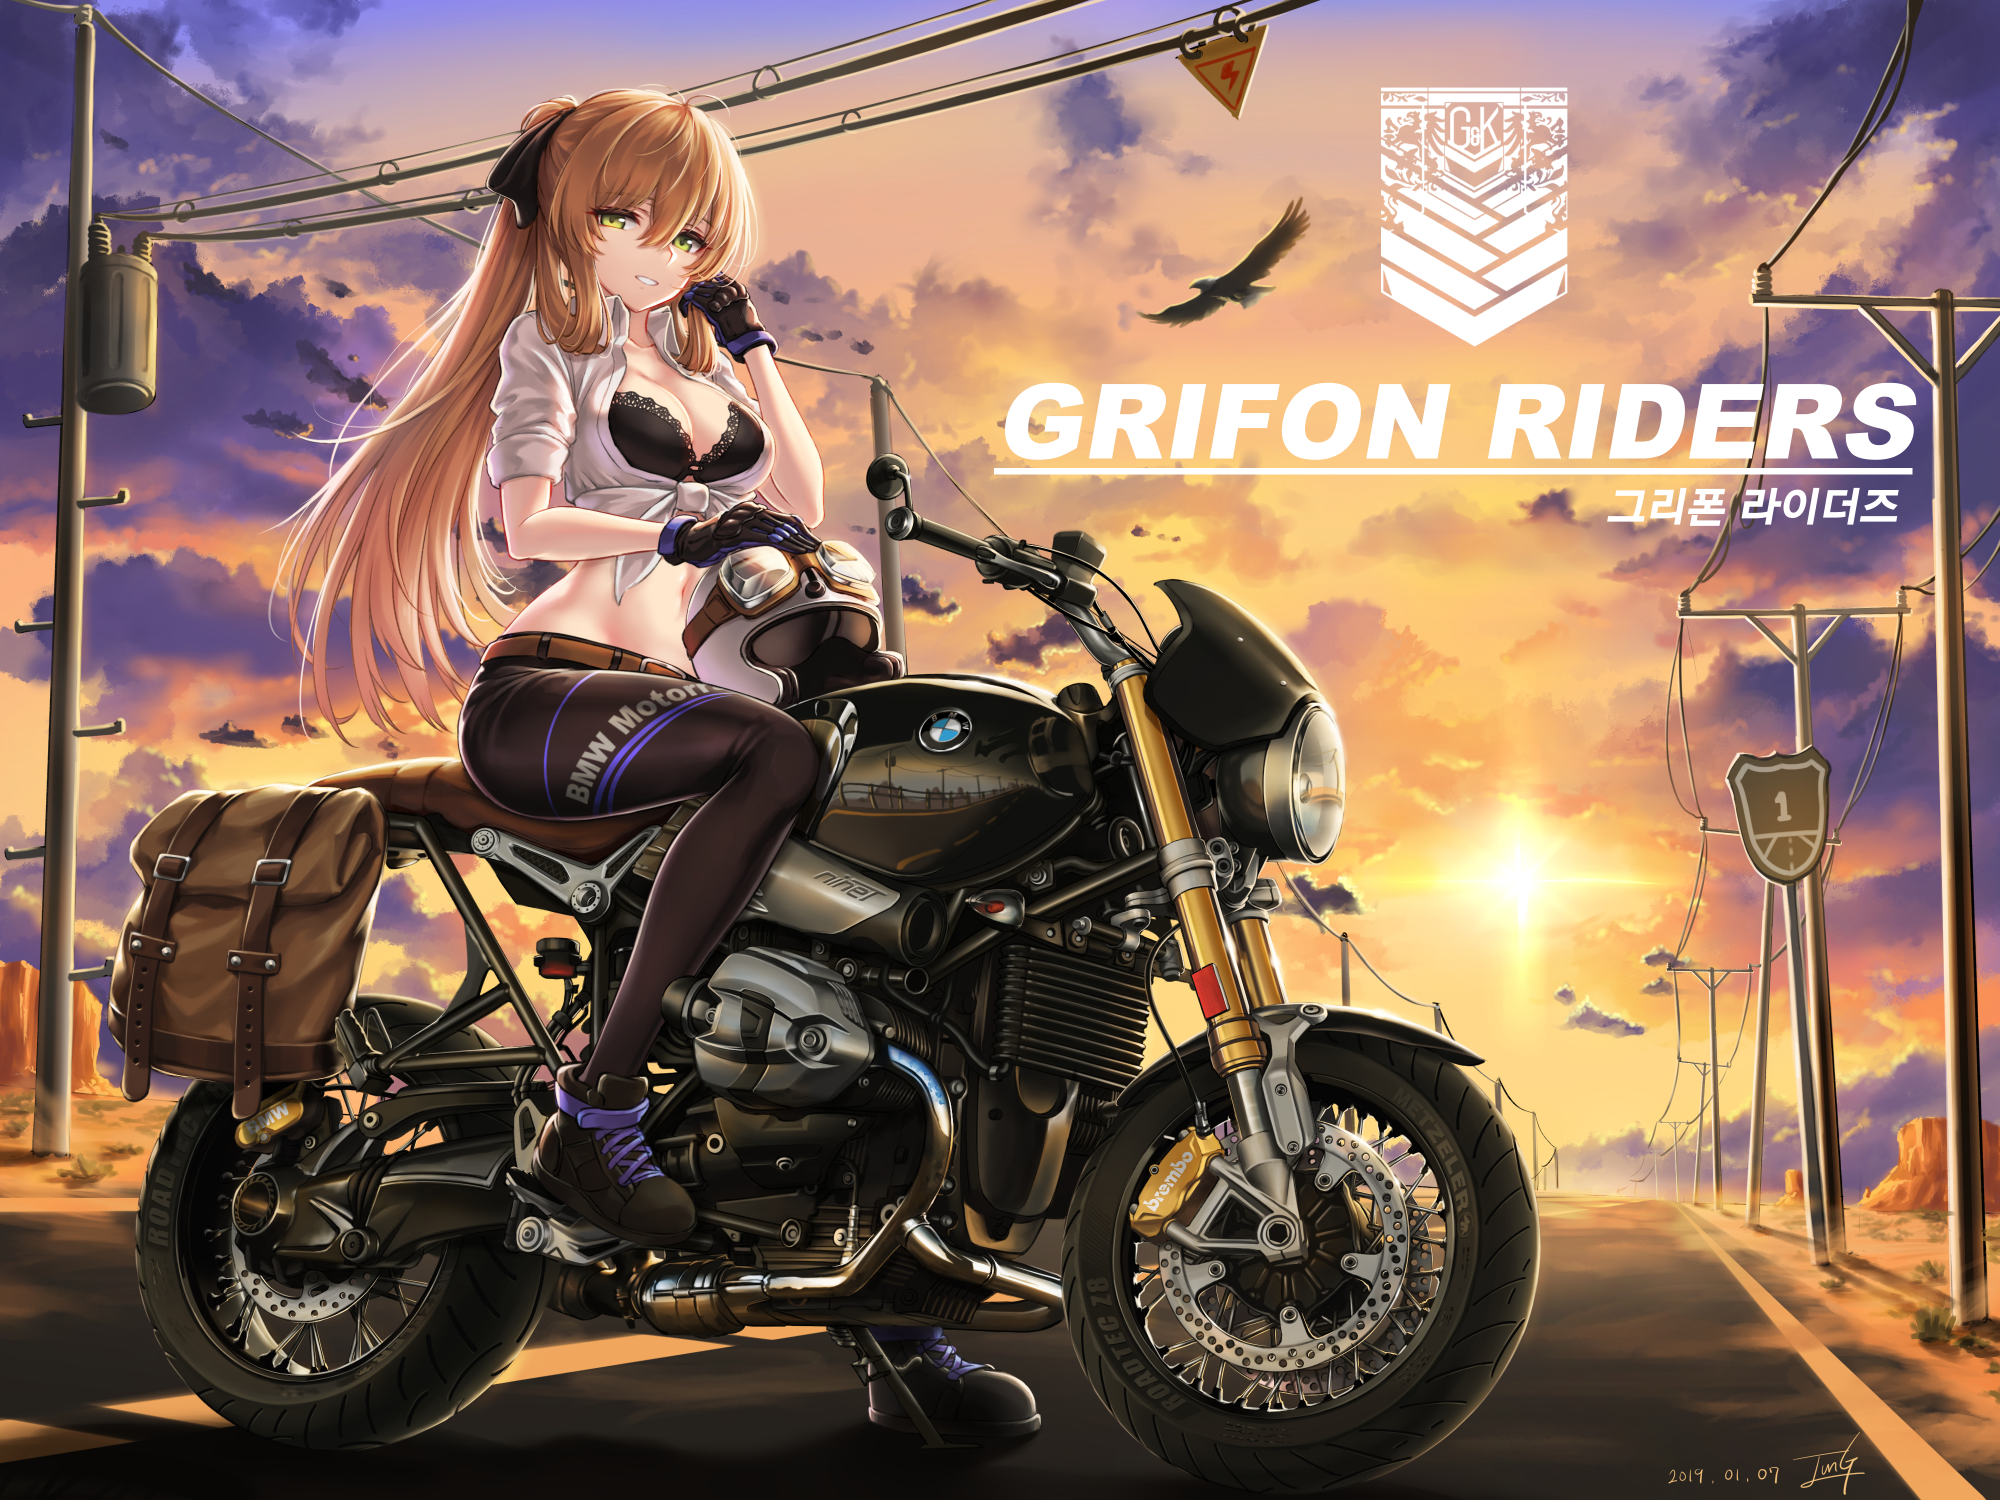 Anime 2000x1500 Pixiv anime anime girls motorcycle